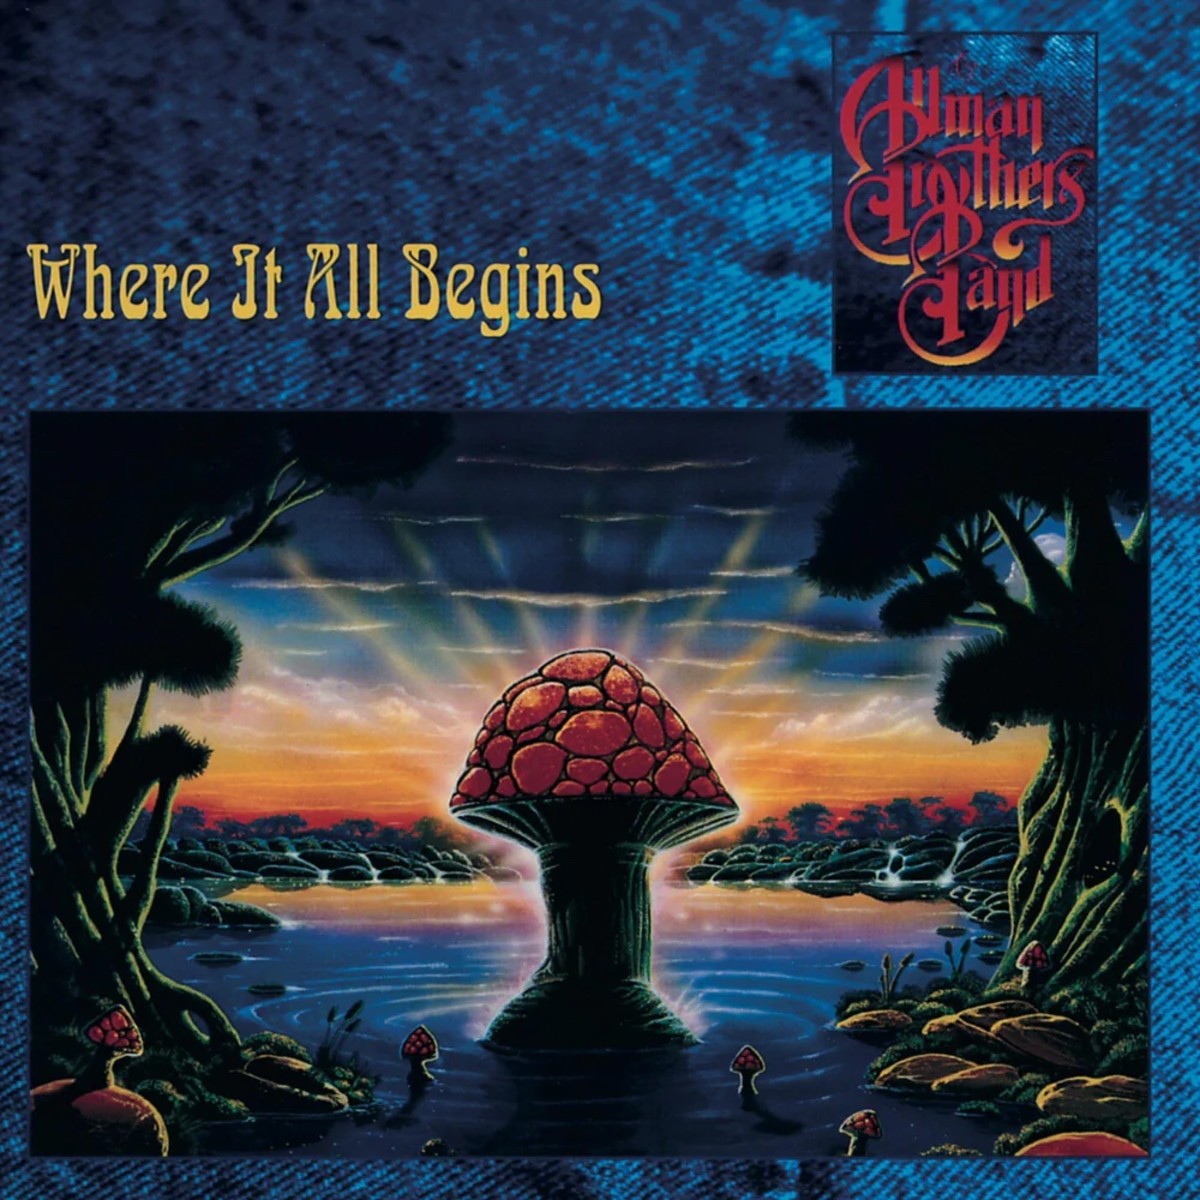 ABB's 1994 "Where It All Begins"